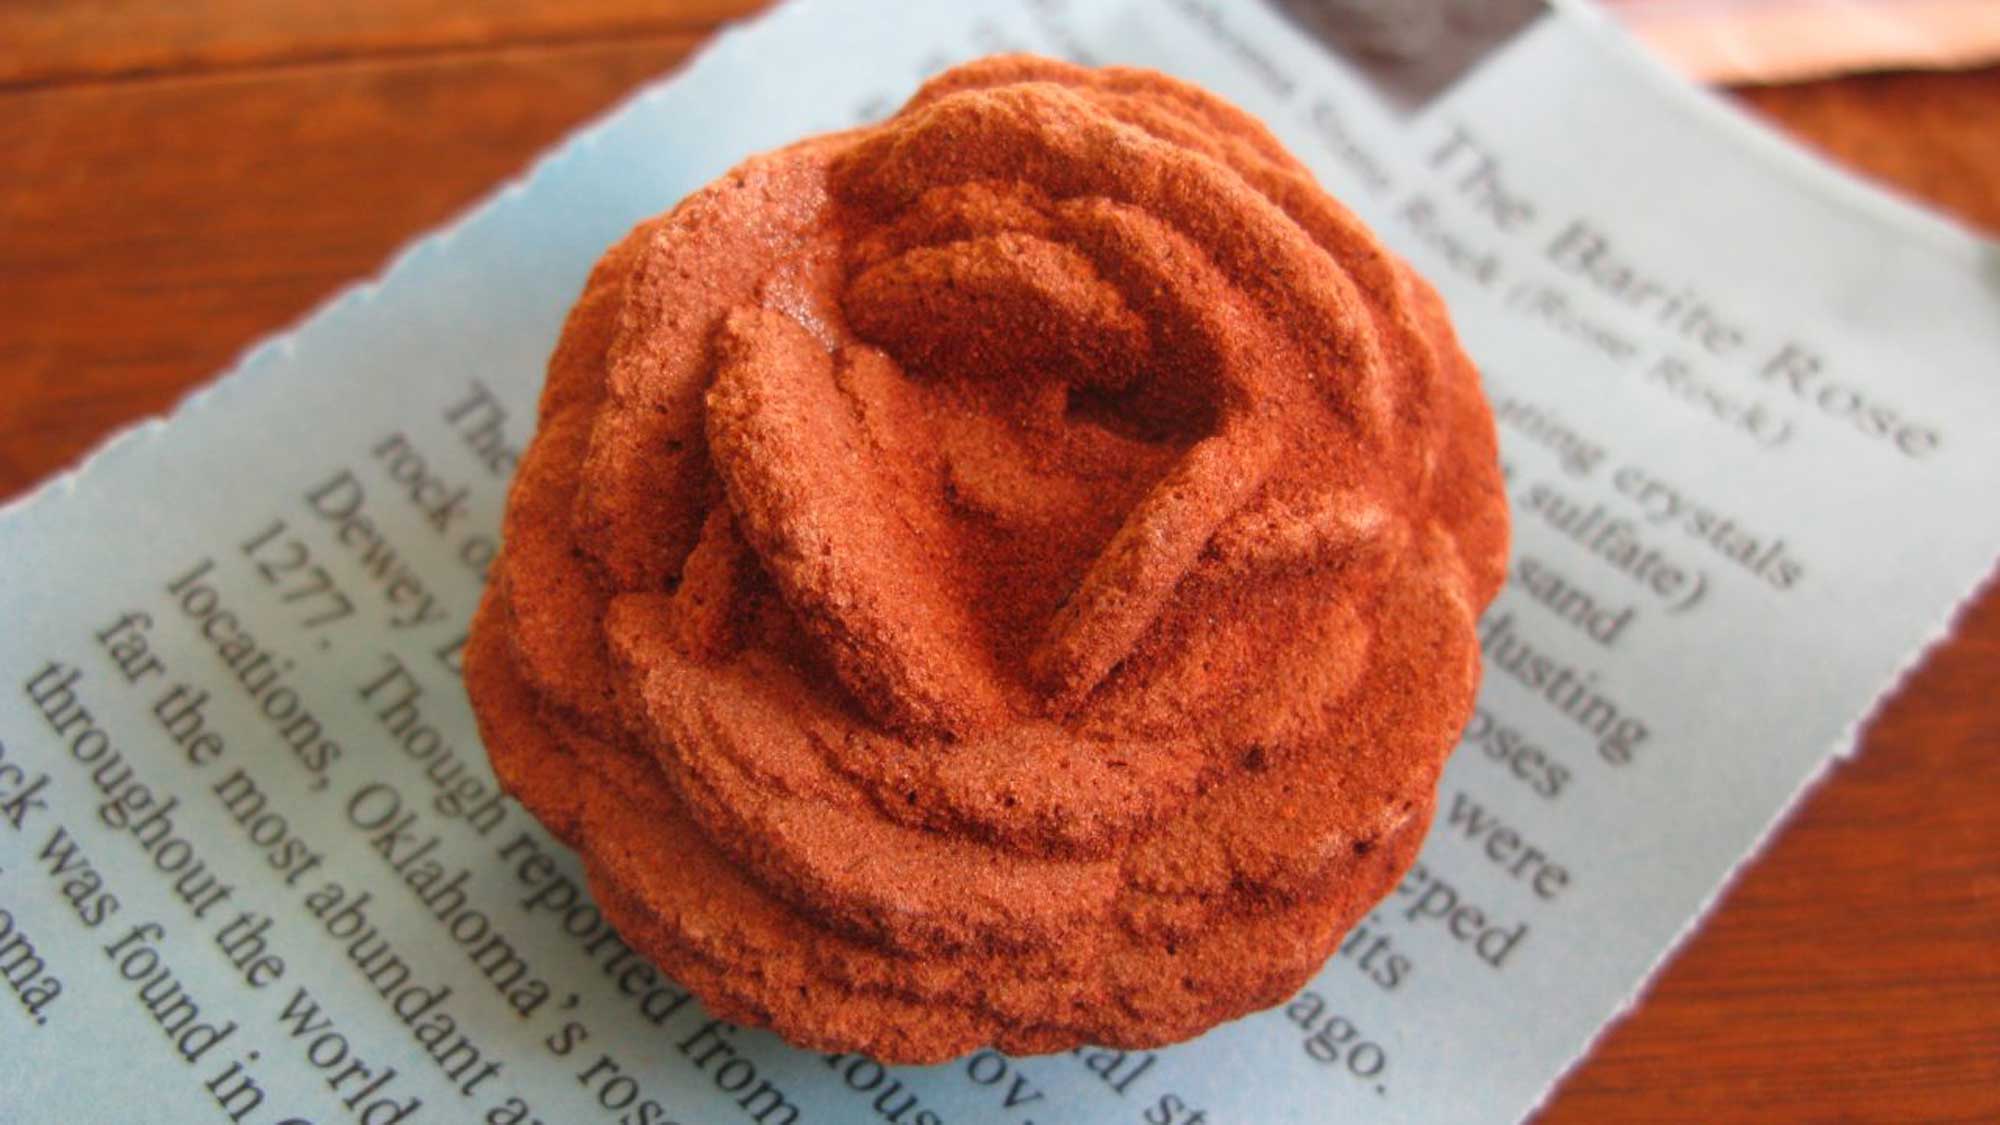 Photograph of a specimen of barite desert rose from Oklahoma.